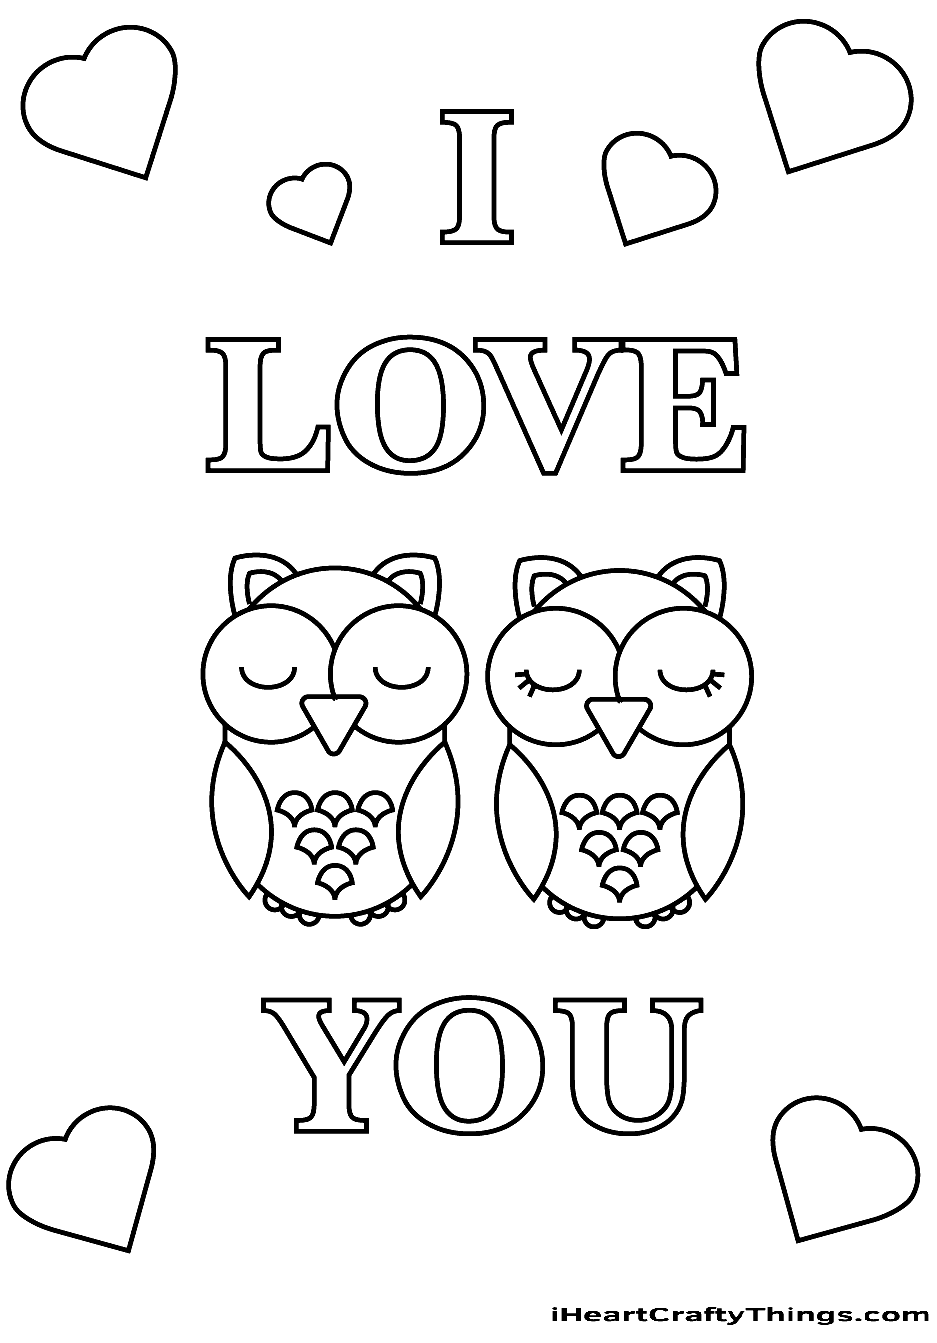 Desenho para colorir de duas corujas apaixonadas